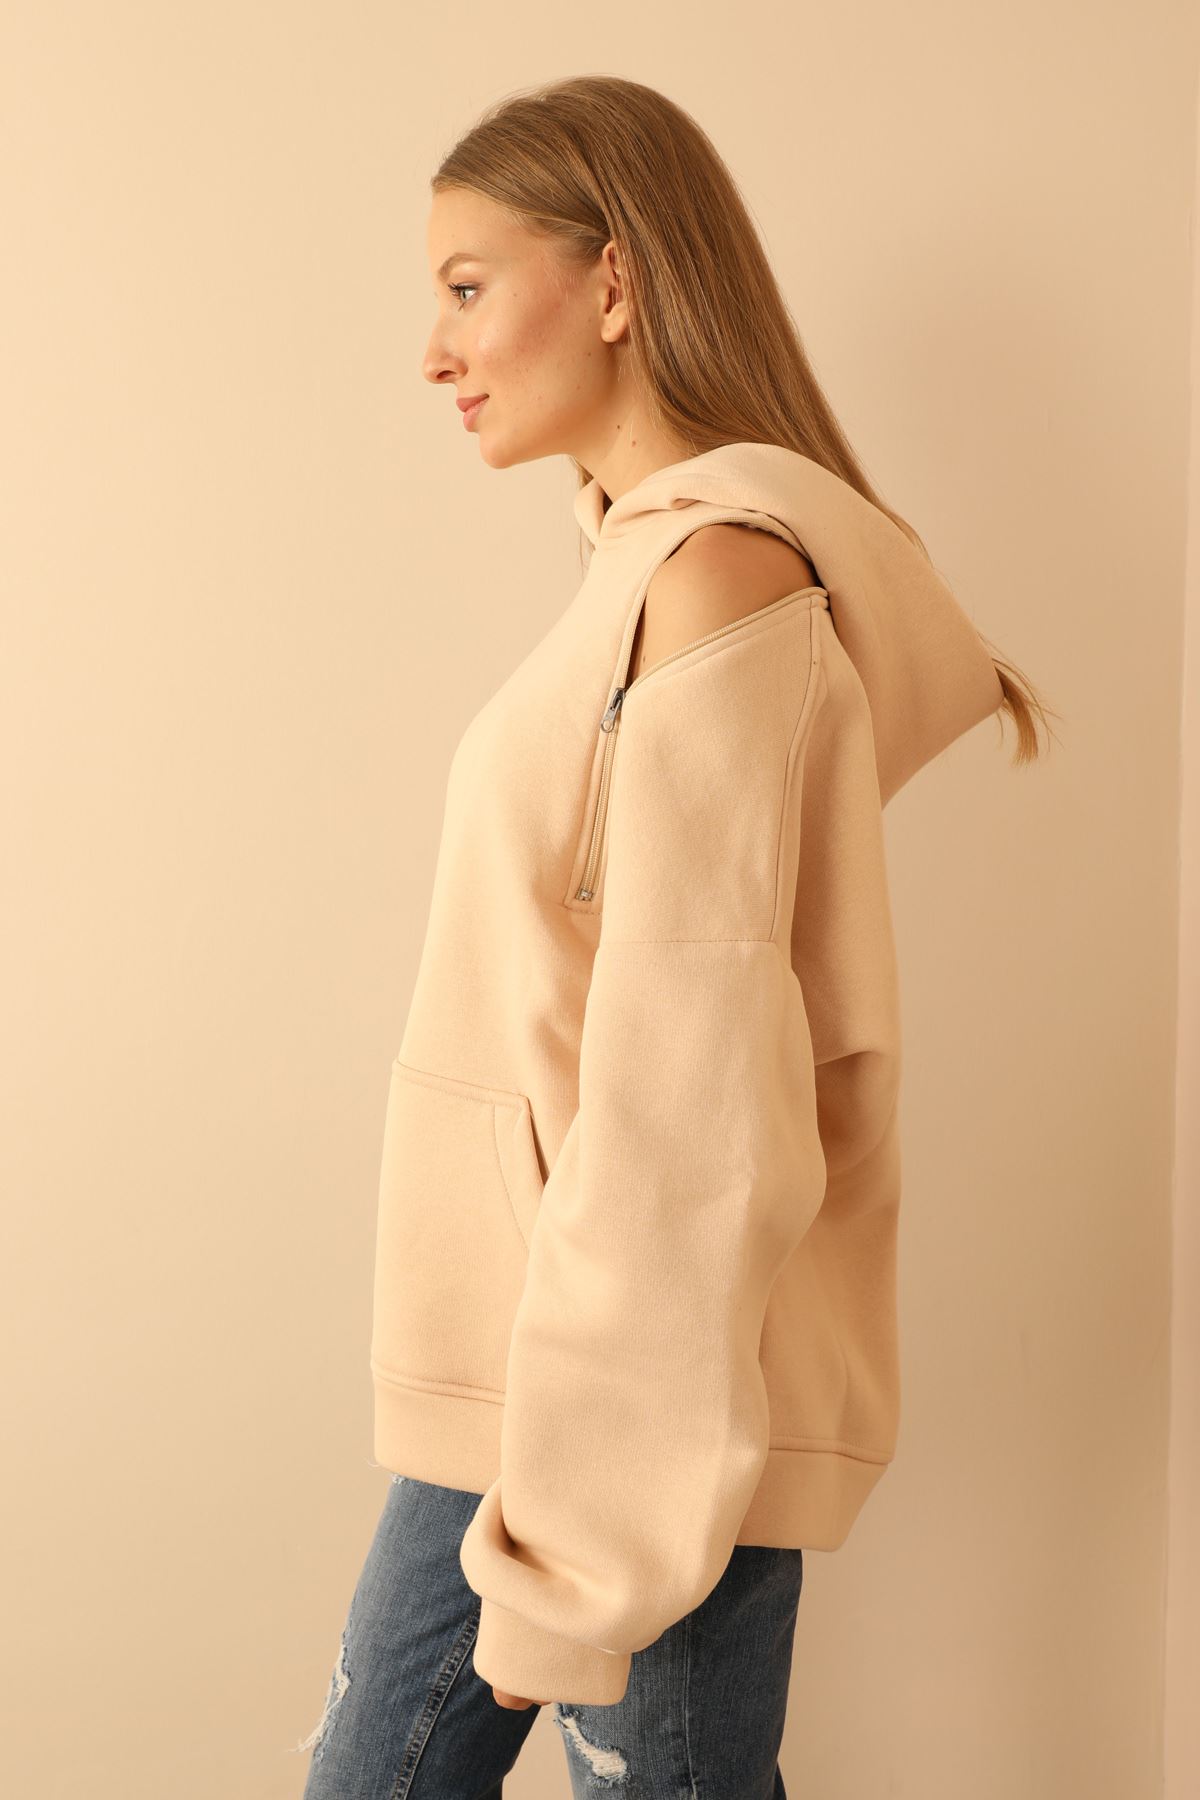 Thread Knit FabricLong Sleeve Hooded Below Hip Oversize Zip Women Sweatshirt - Beige 